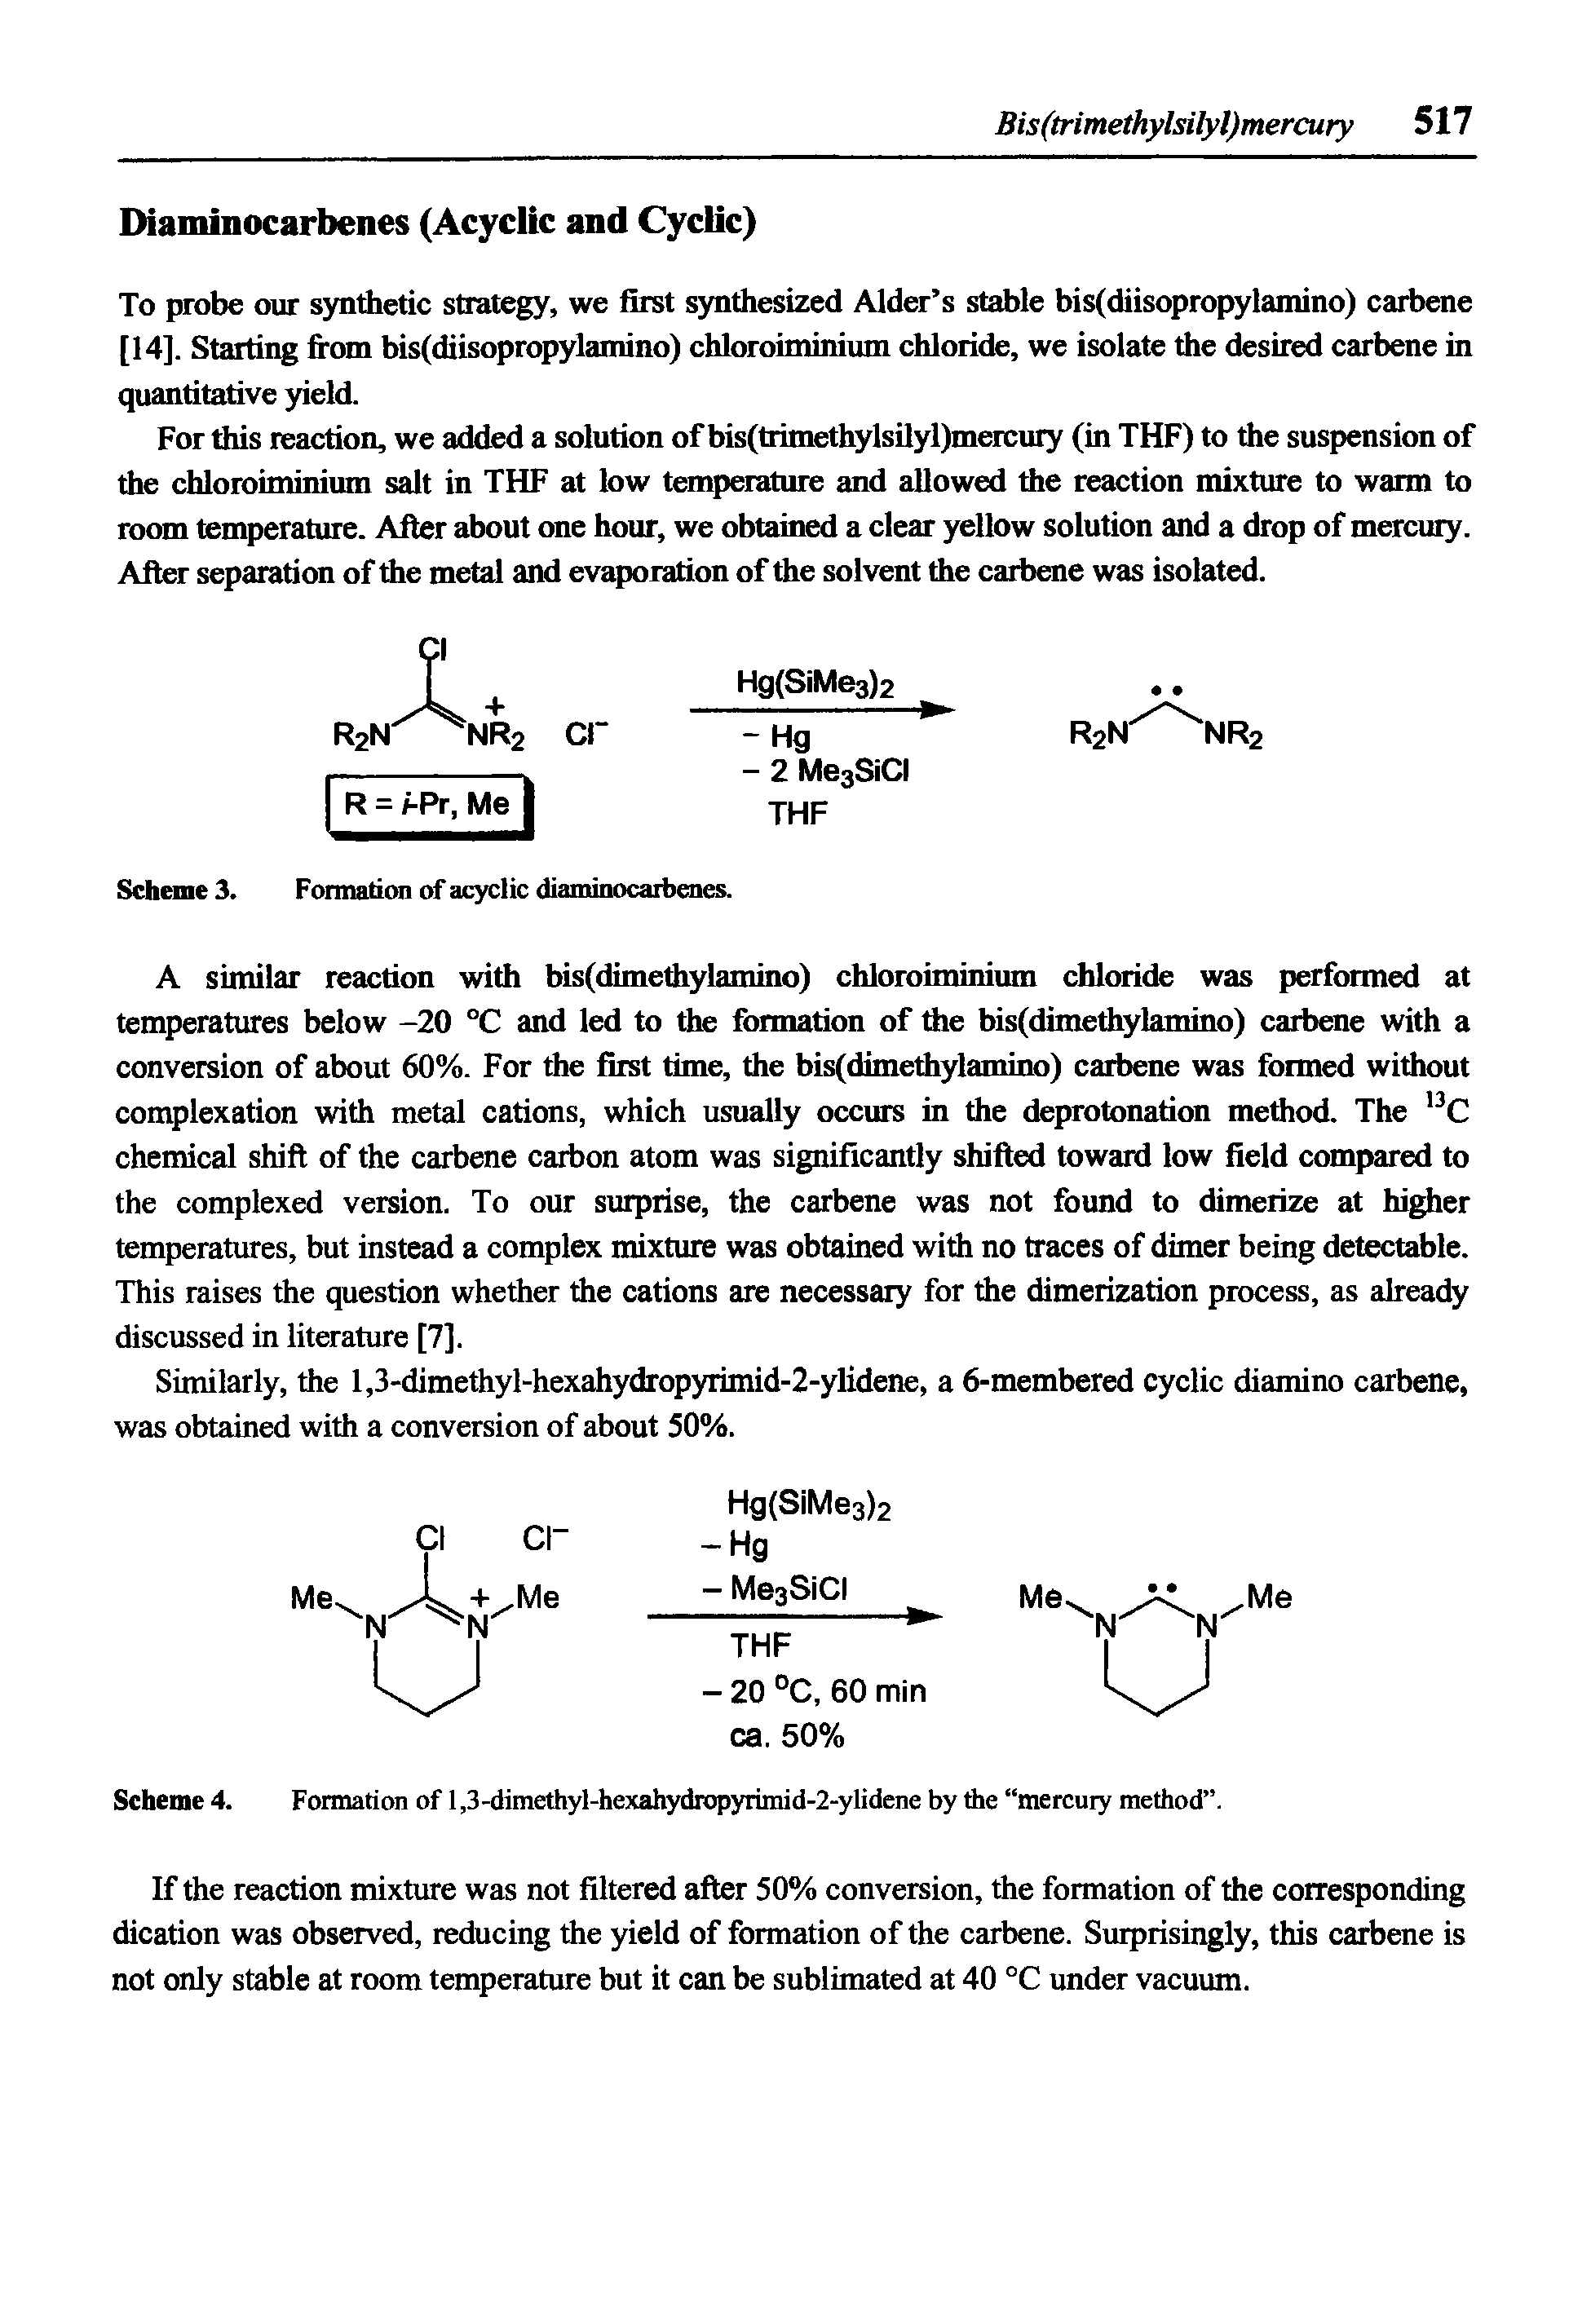 Scheme 4. Formation of 1,3-dimethyl-hexahydropyrimid-2-ylidene by the mercury method .